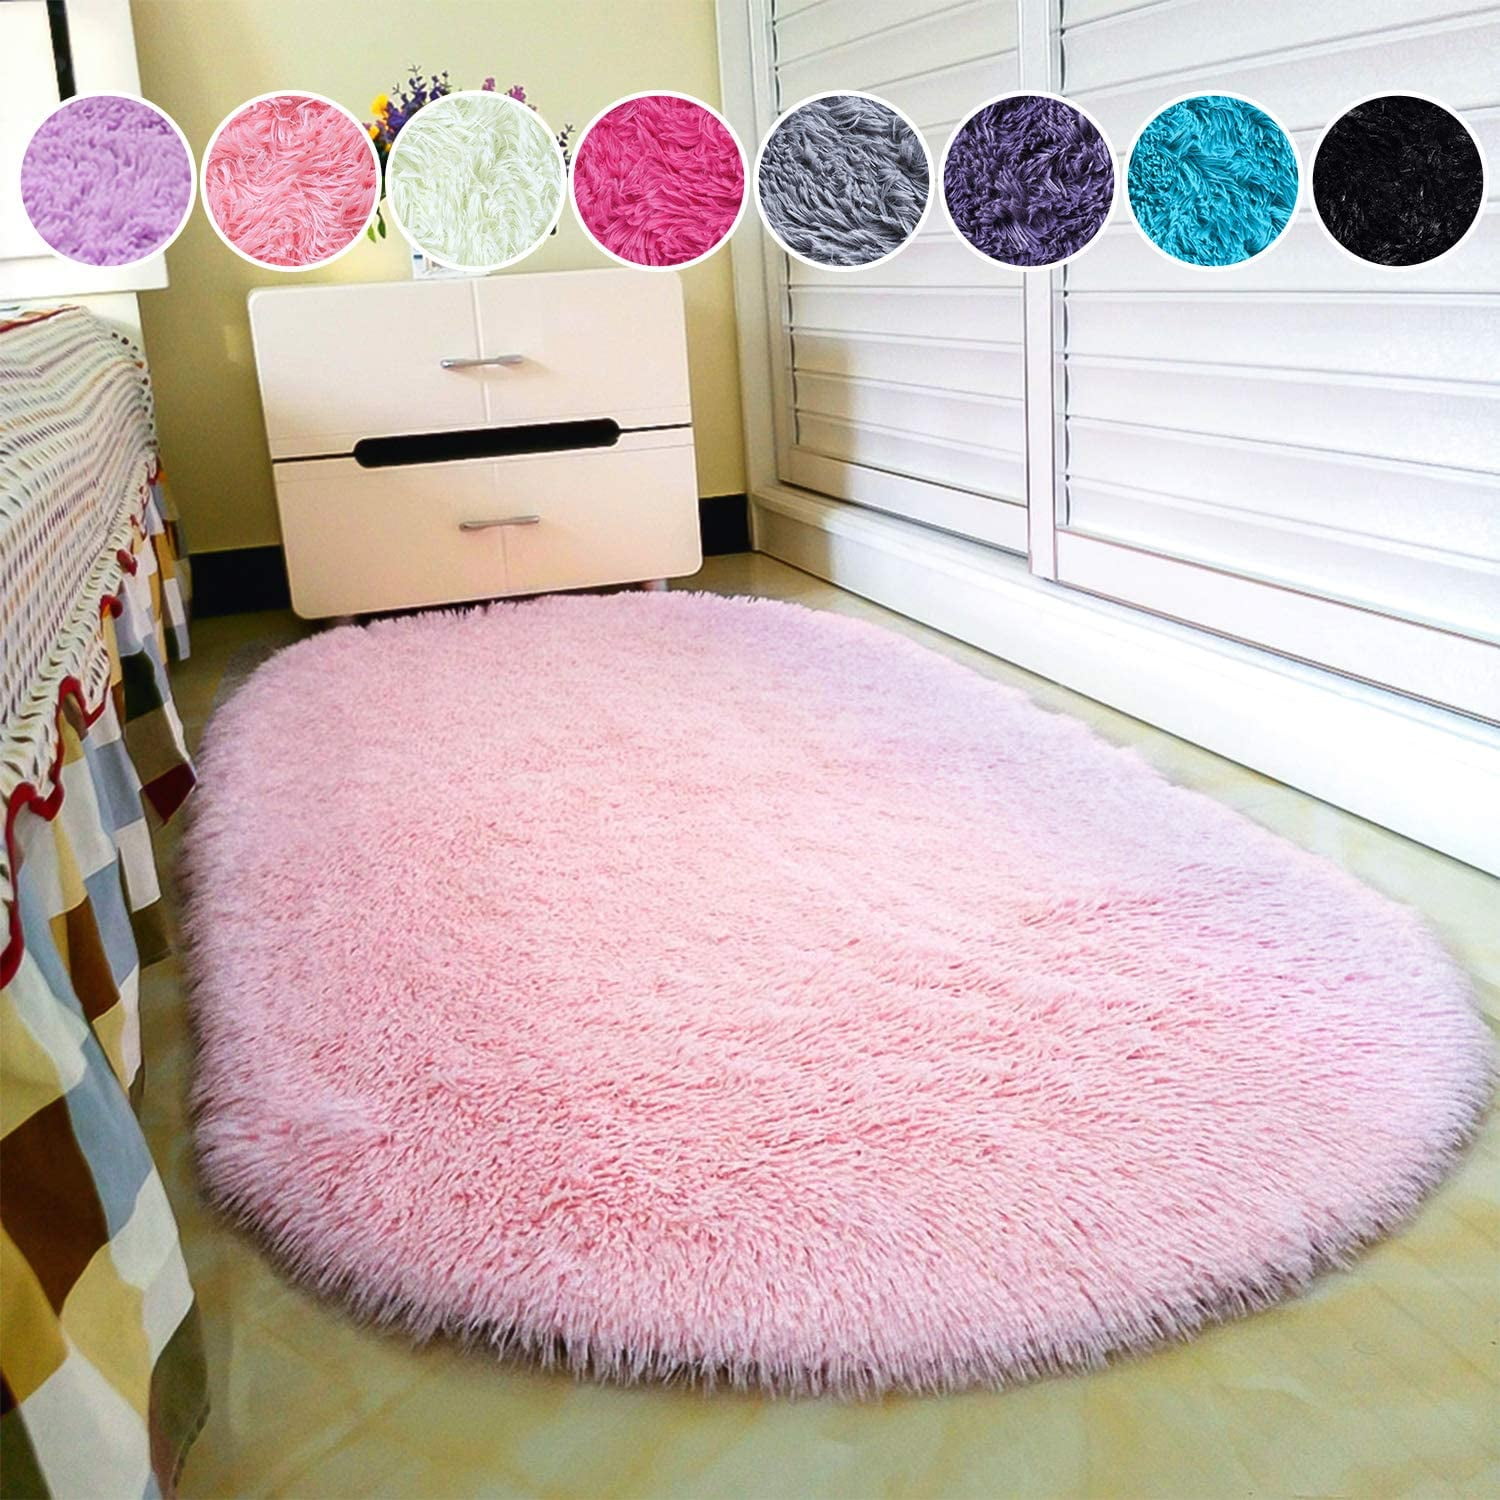 Slinx Soft Modern Pink Rugs Shaggy Fluffy Living Room Plush Carpets For  Children Bedroom Bed Floor Foot Mats Nursery Kids Play Rugs